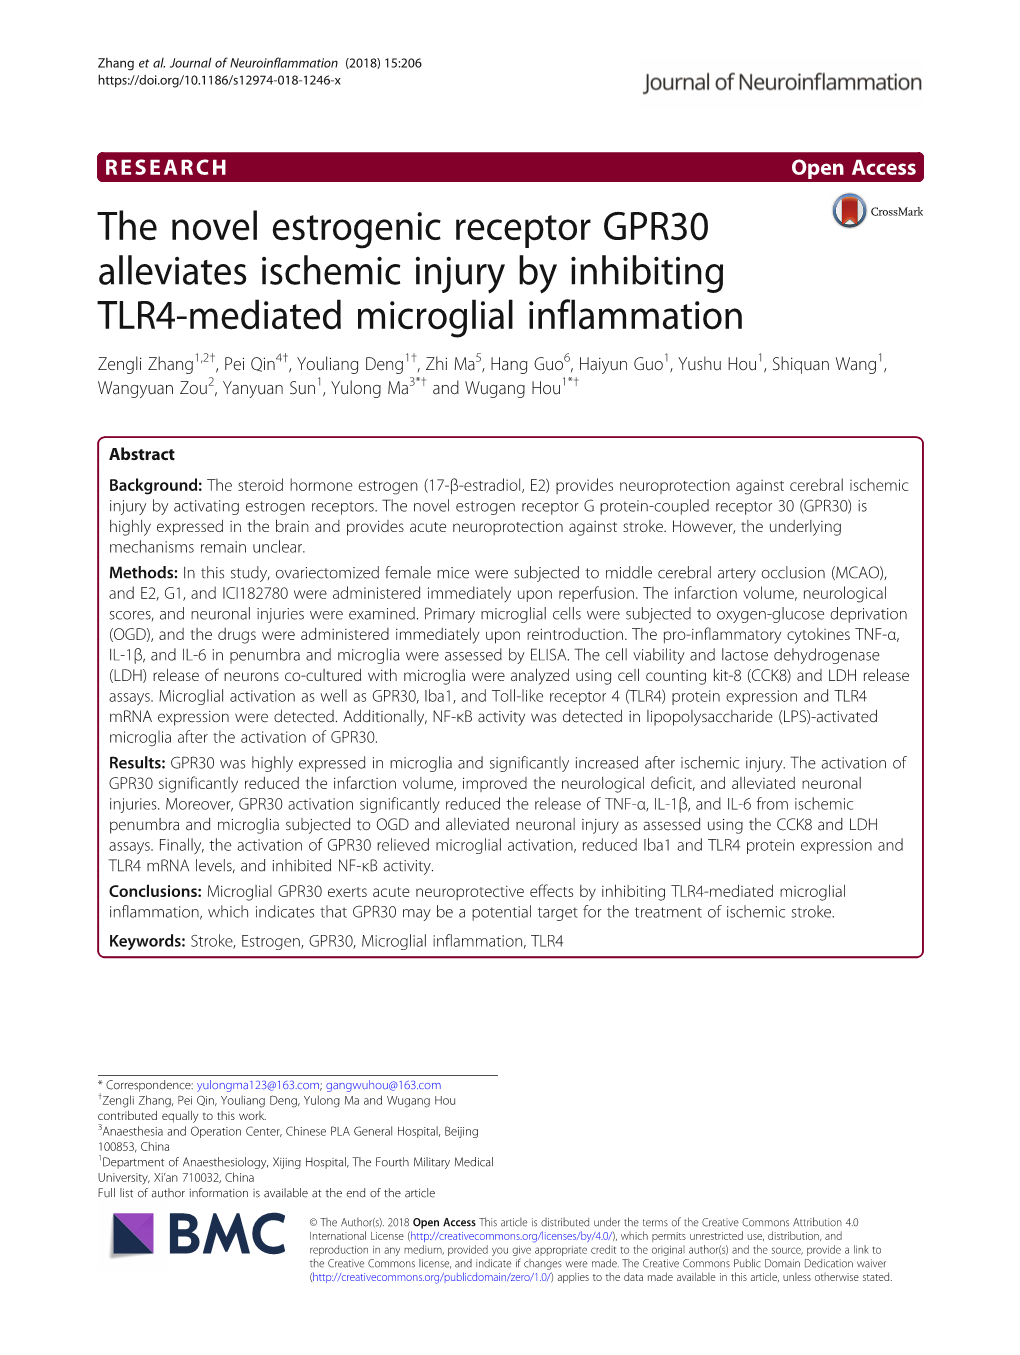 The Novel Estrogenic Receptor GPR30 Alleviates Ischemic Injury By